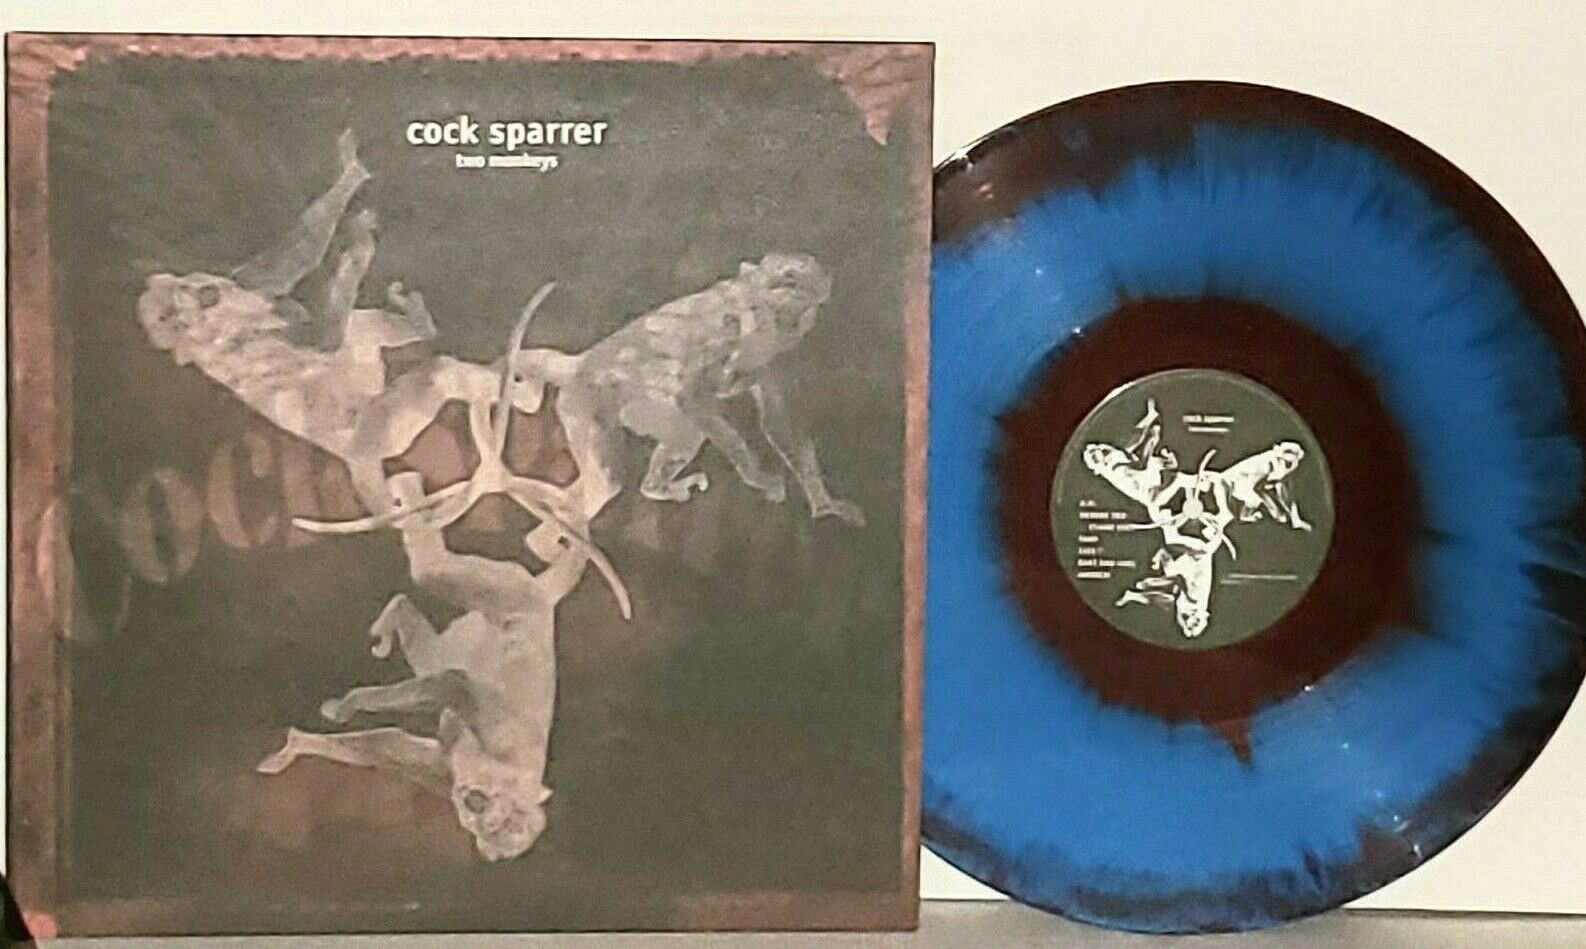 COCK SPARRER Two Monkeys Claret & Blue Vinyl LP VG+ 2010 PPR 033 Plays Well Oi